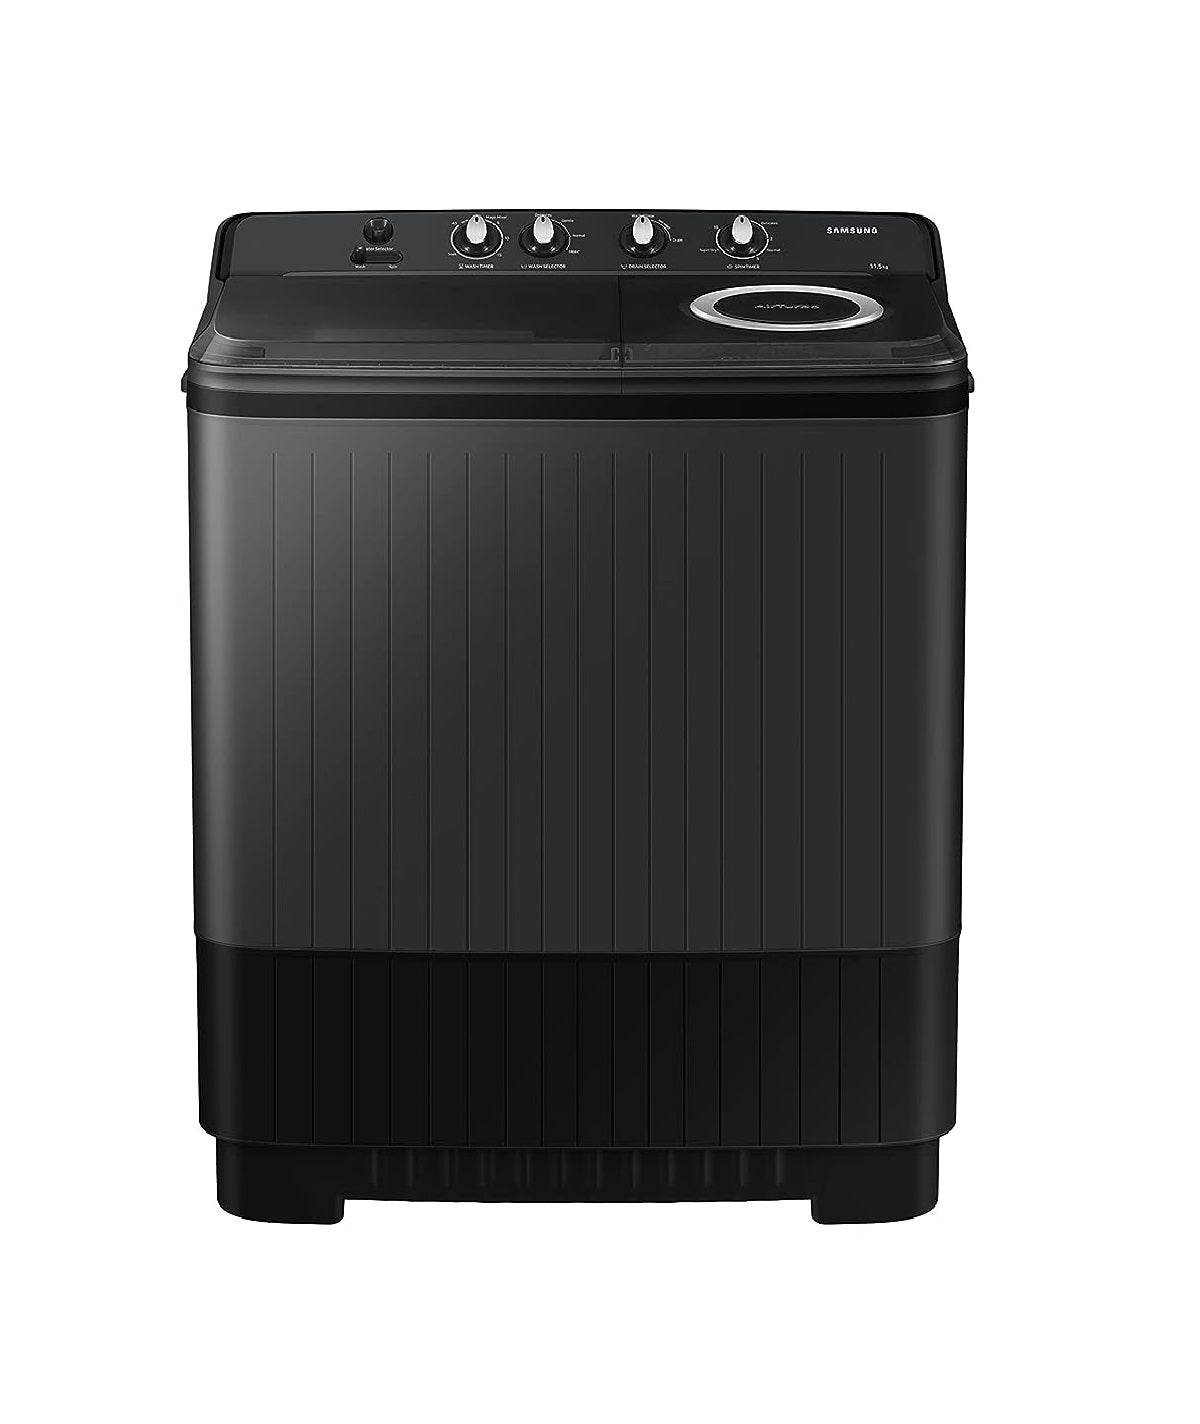 Samsung WT11A4260GD/TL 11.5 Semi Automatic Washing Machine, Dark Gray